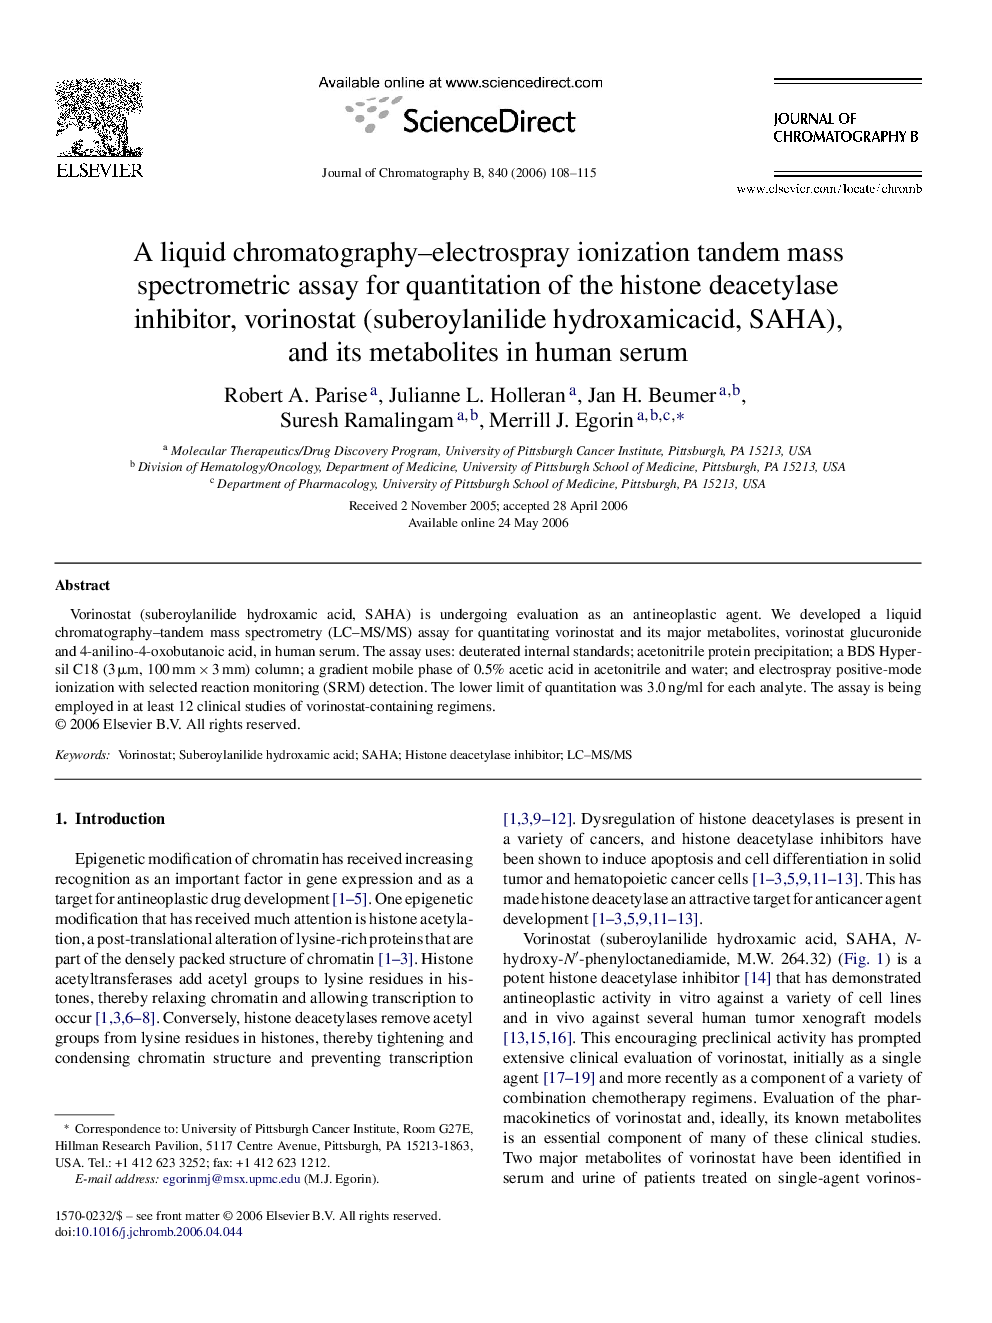 A liquid chromatography–electrospray ionization tandem mass spectrometric assay for quantitation of the histone deacetylase inhibitor, vorinostat (suberoylanilide hydroxamicacid, SAHA), and its metabolites in human serum